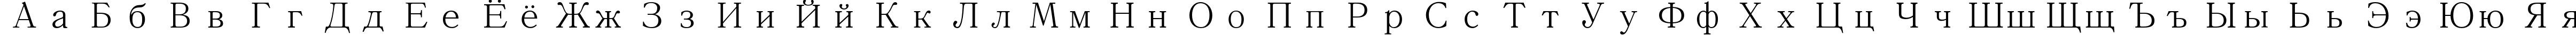 Пример написания русского алфавита шрифтом Adobe Song Std L